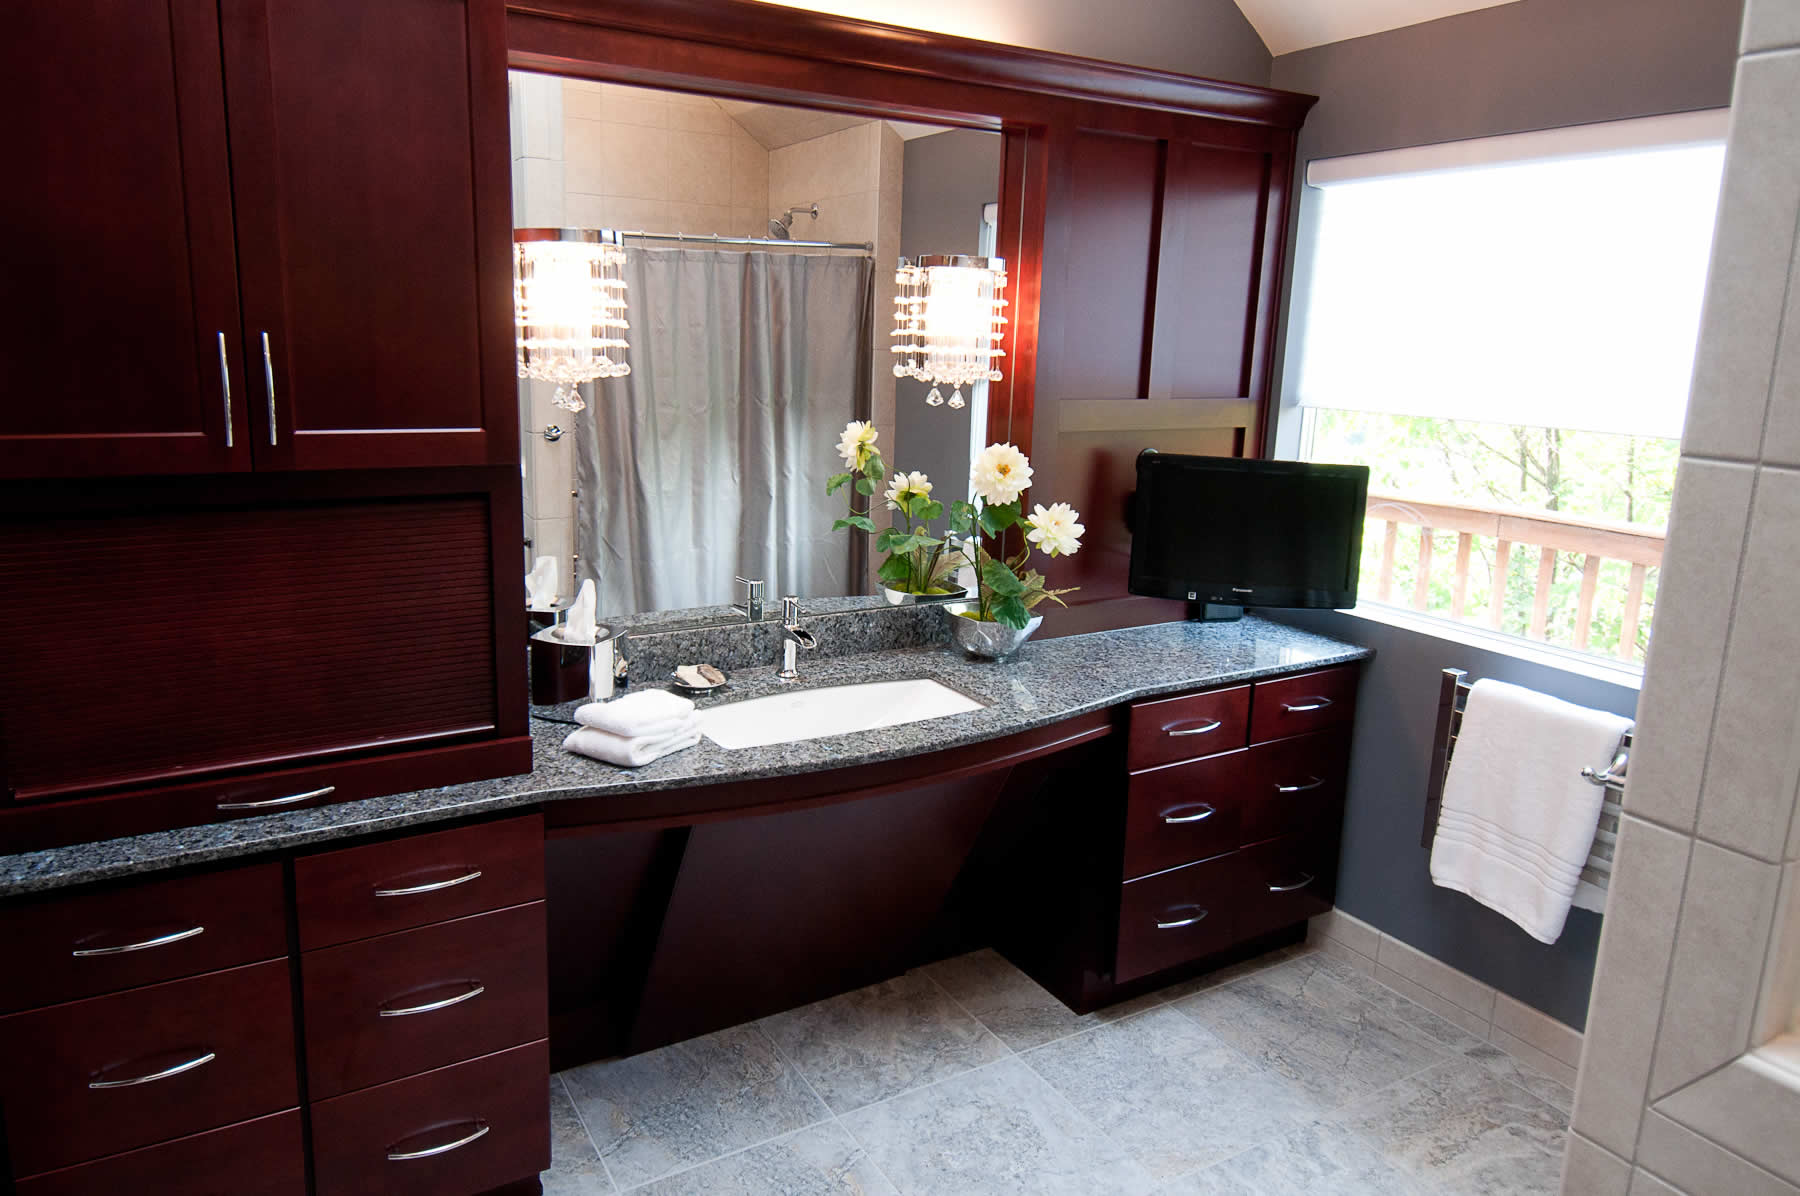 Bathroom vanity after Homes for Life remodeling